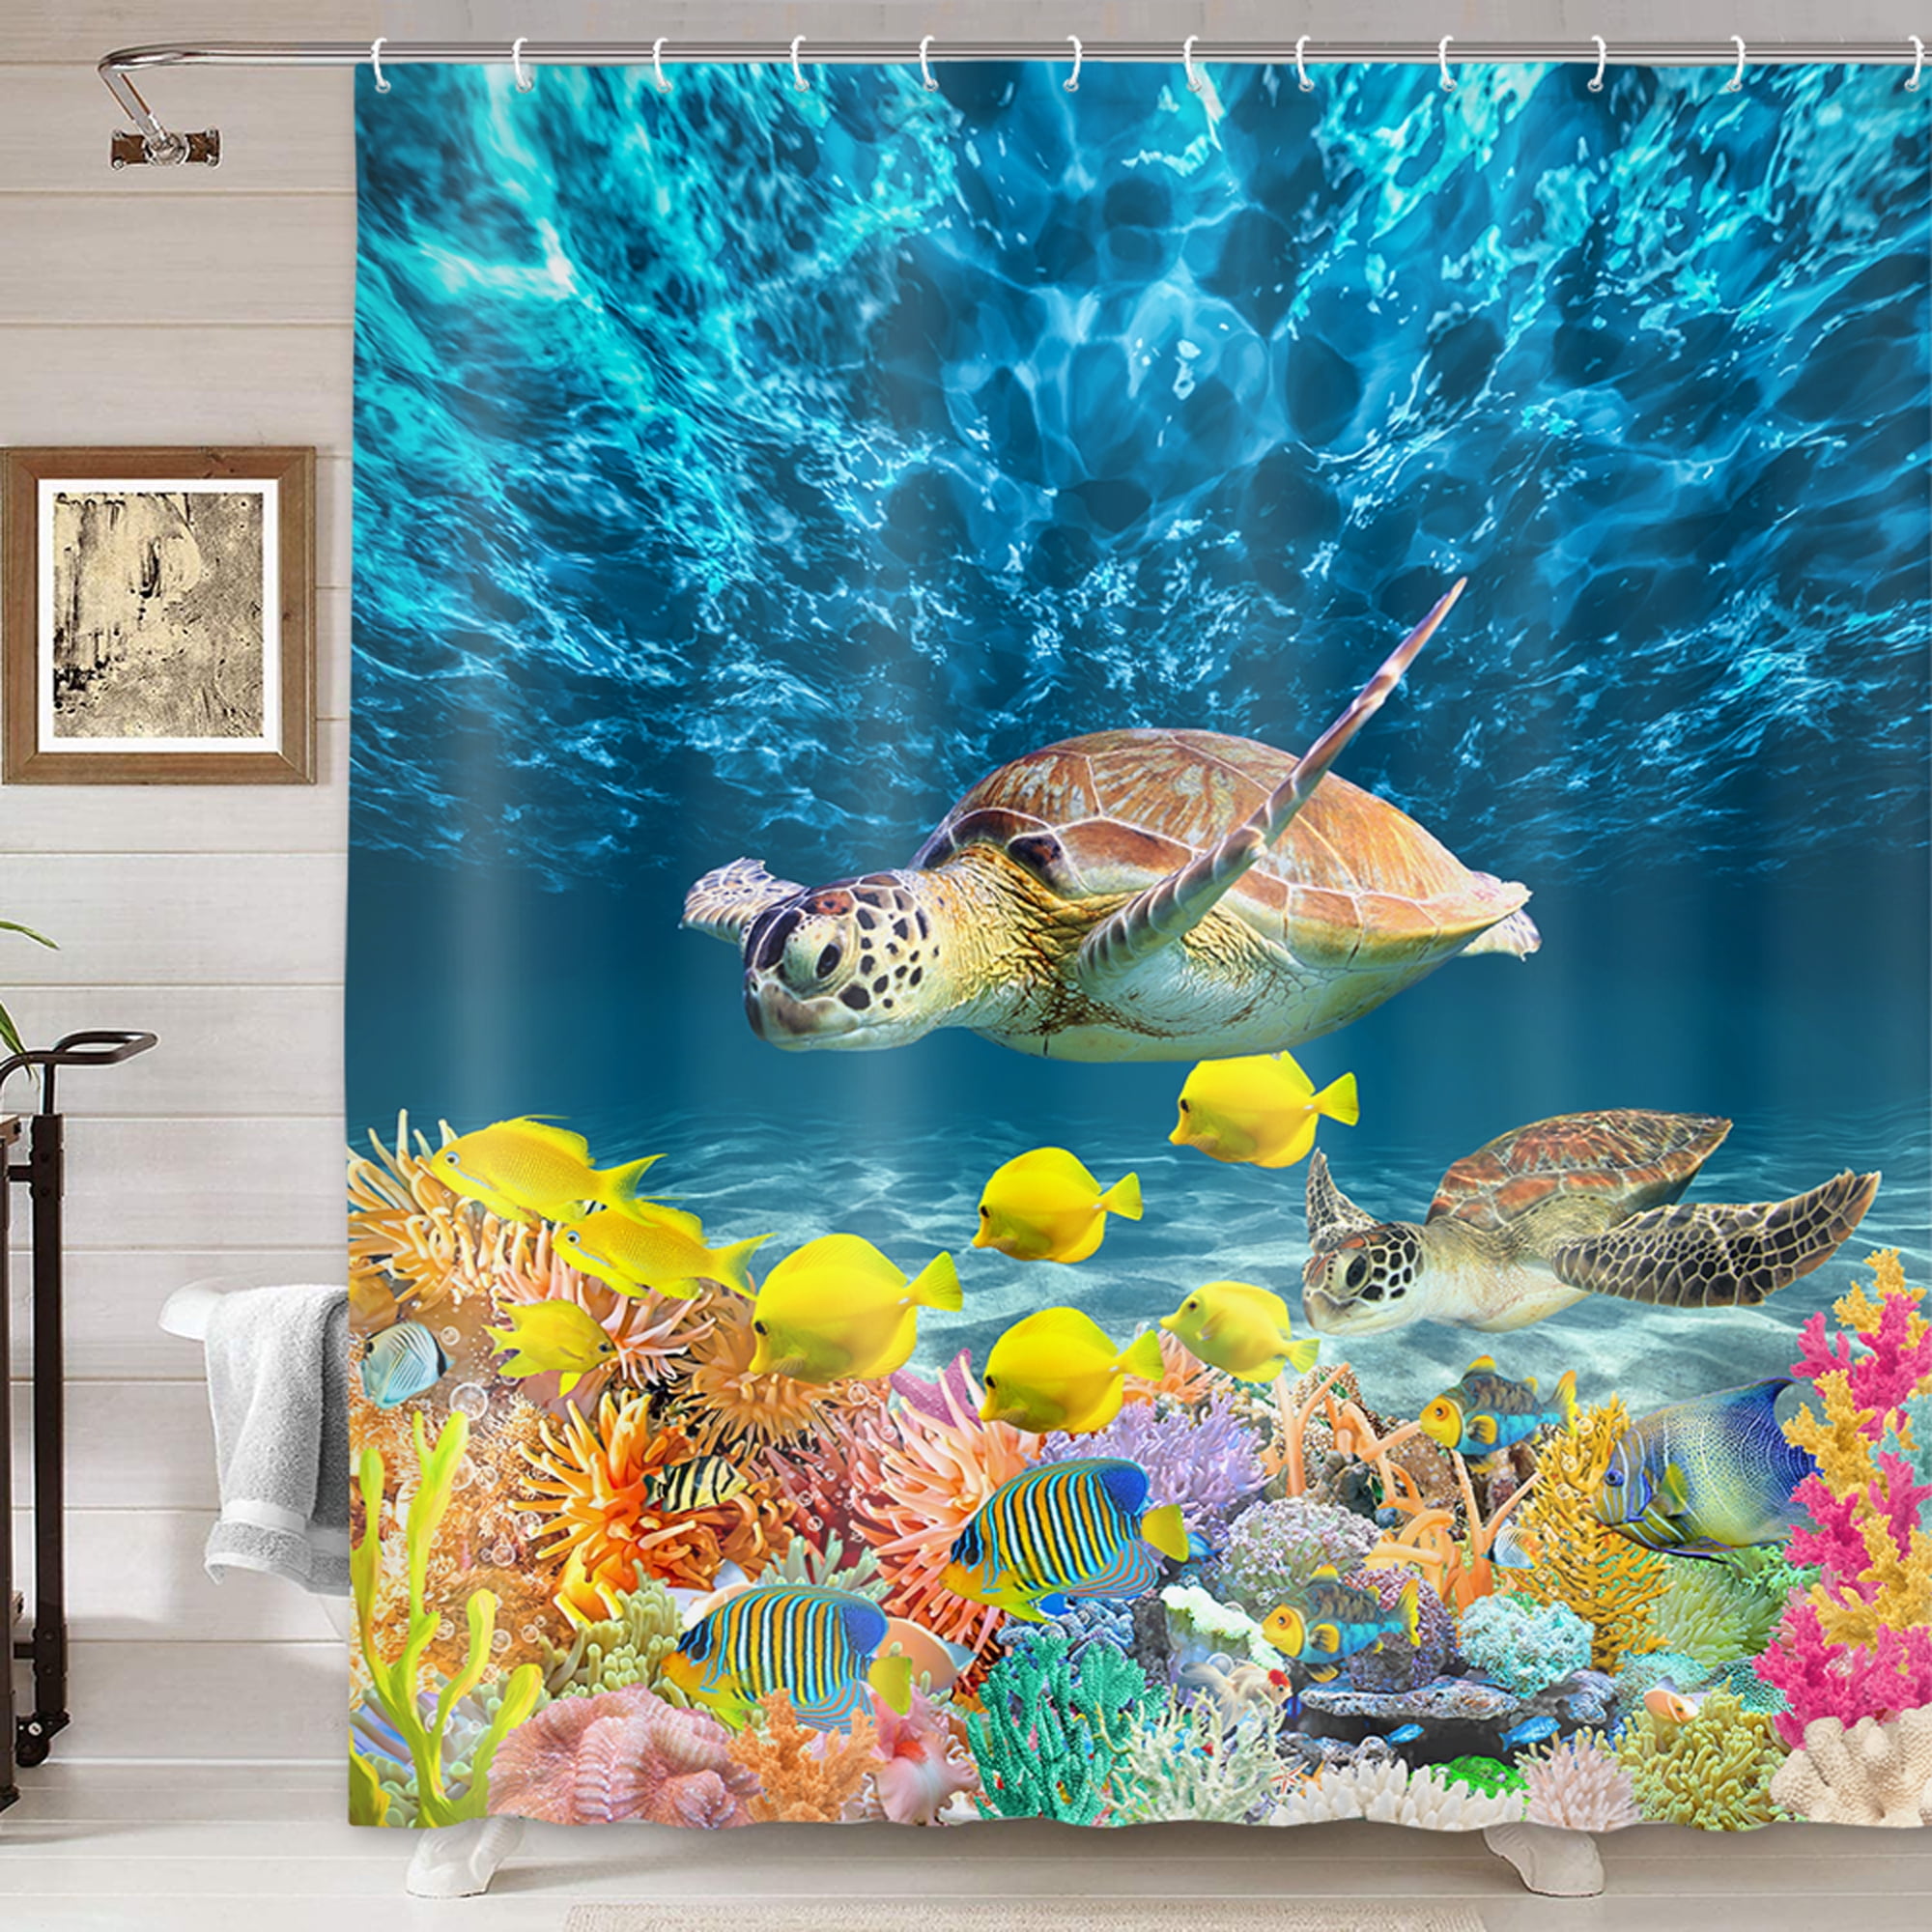 Tropical Ocean Reef Palm Beach Shower Curtain Set for Bathroom Decor w/12 Hooks 